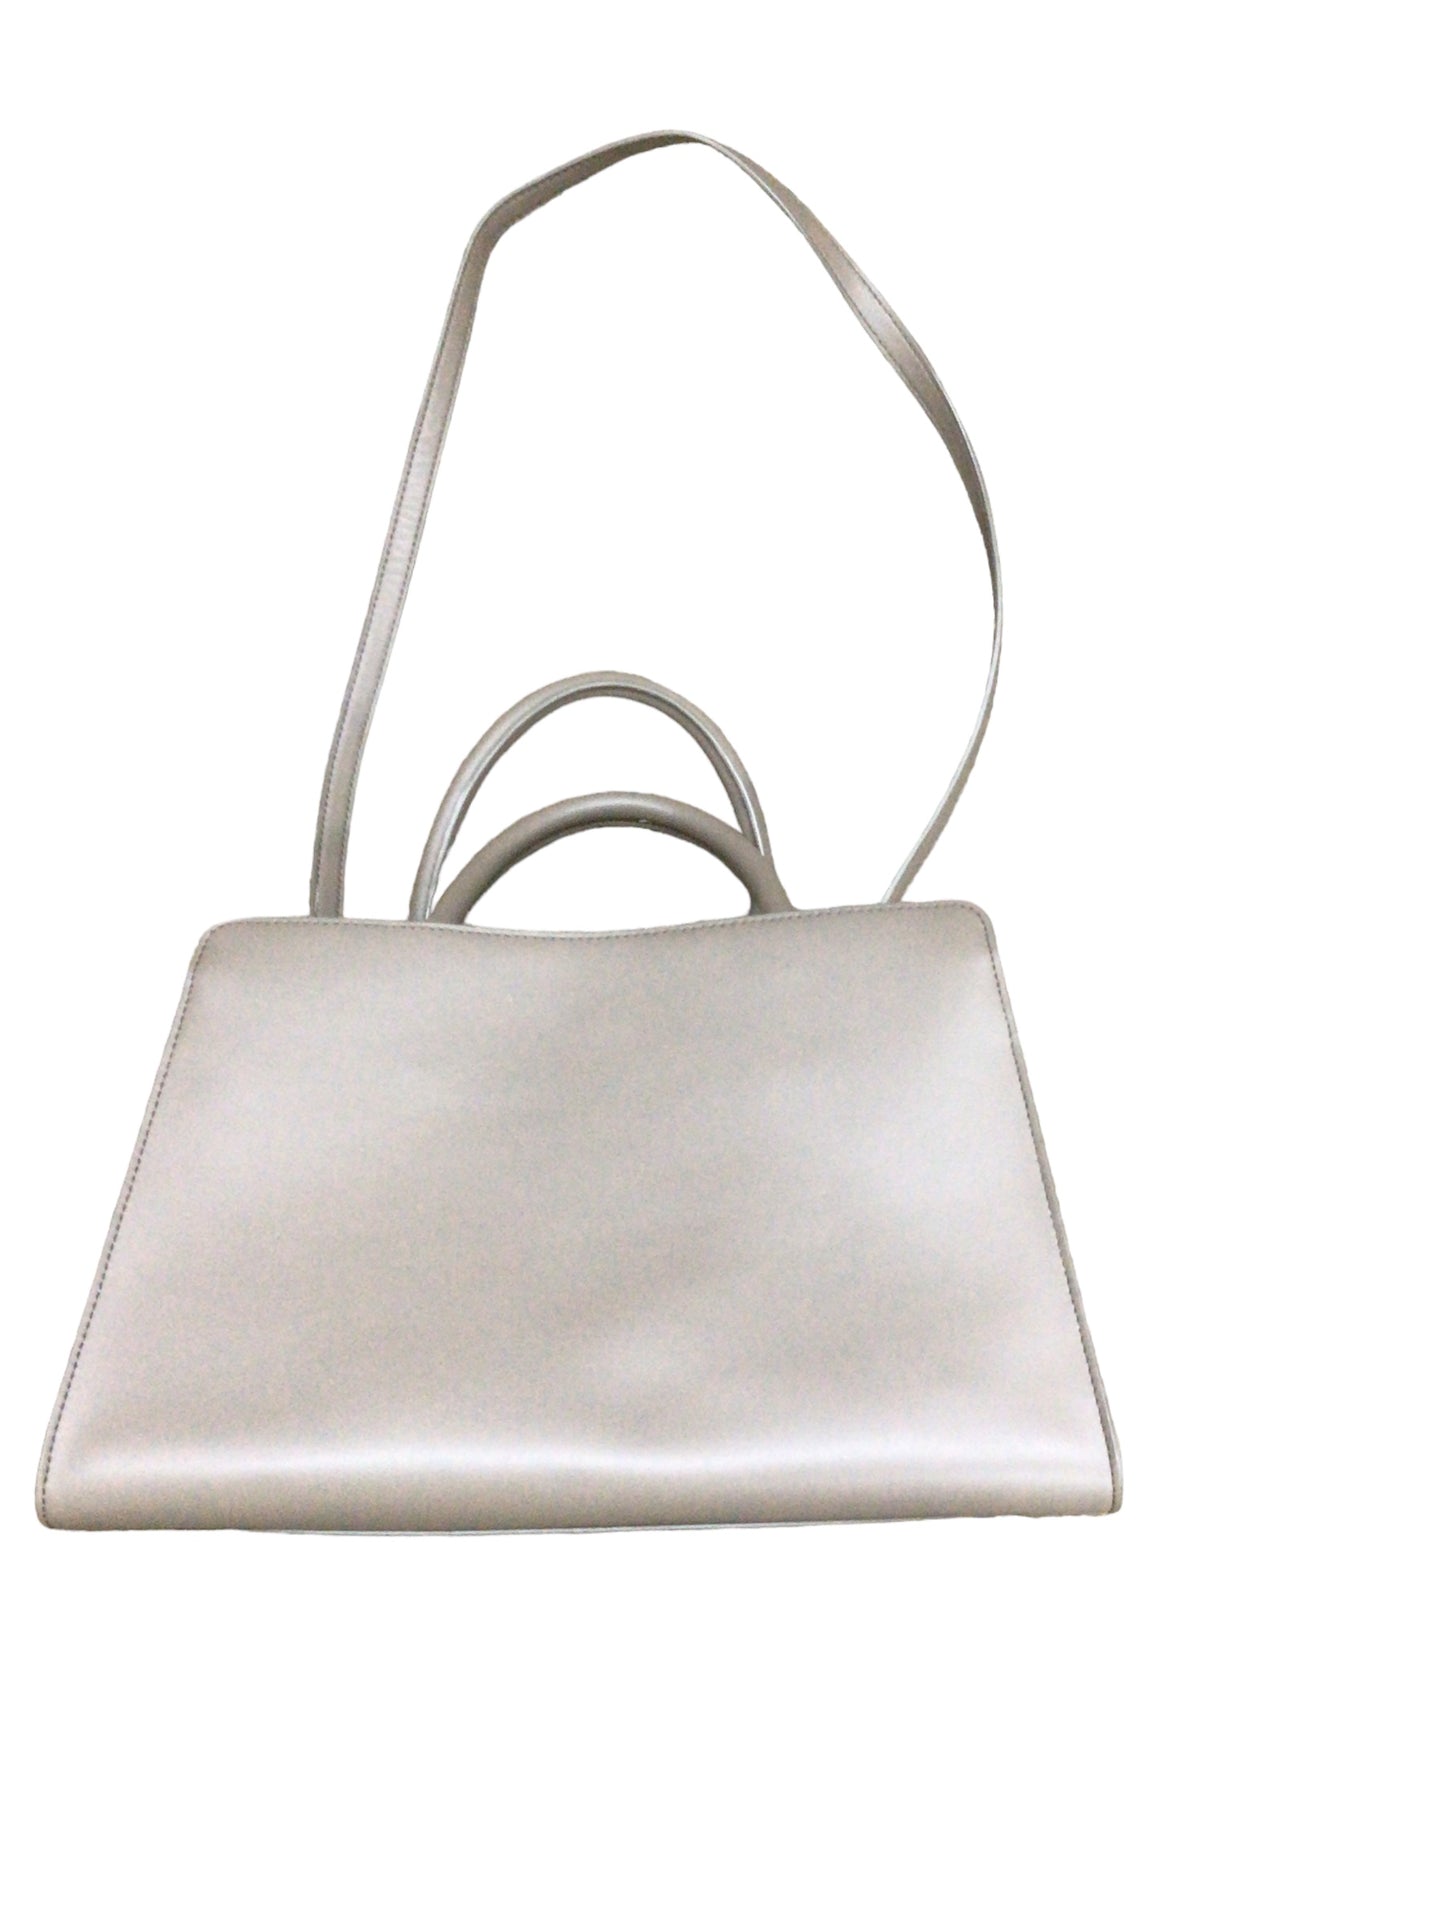 Handbag Designer By Zac Posen  Size: Large